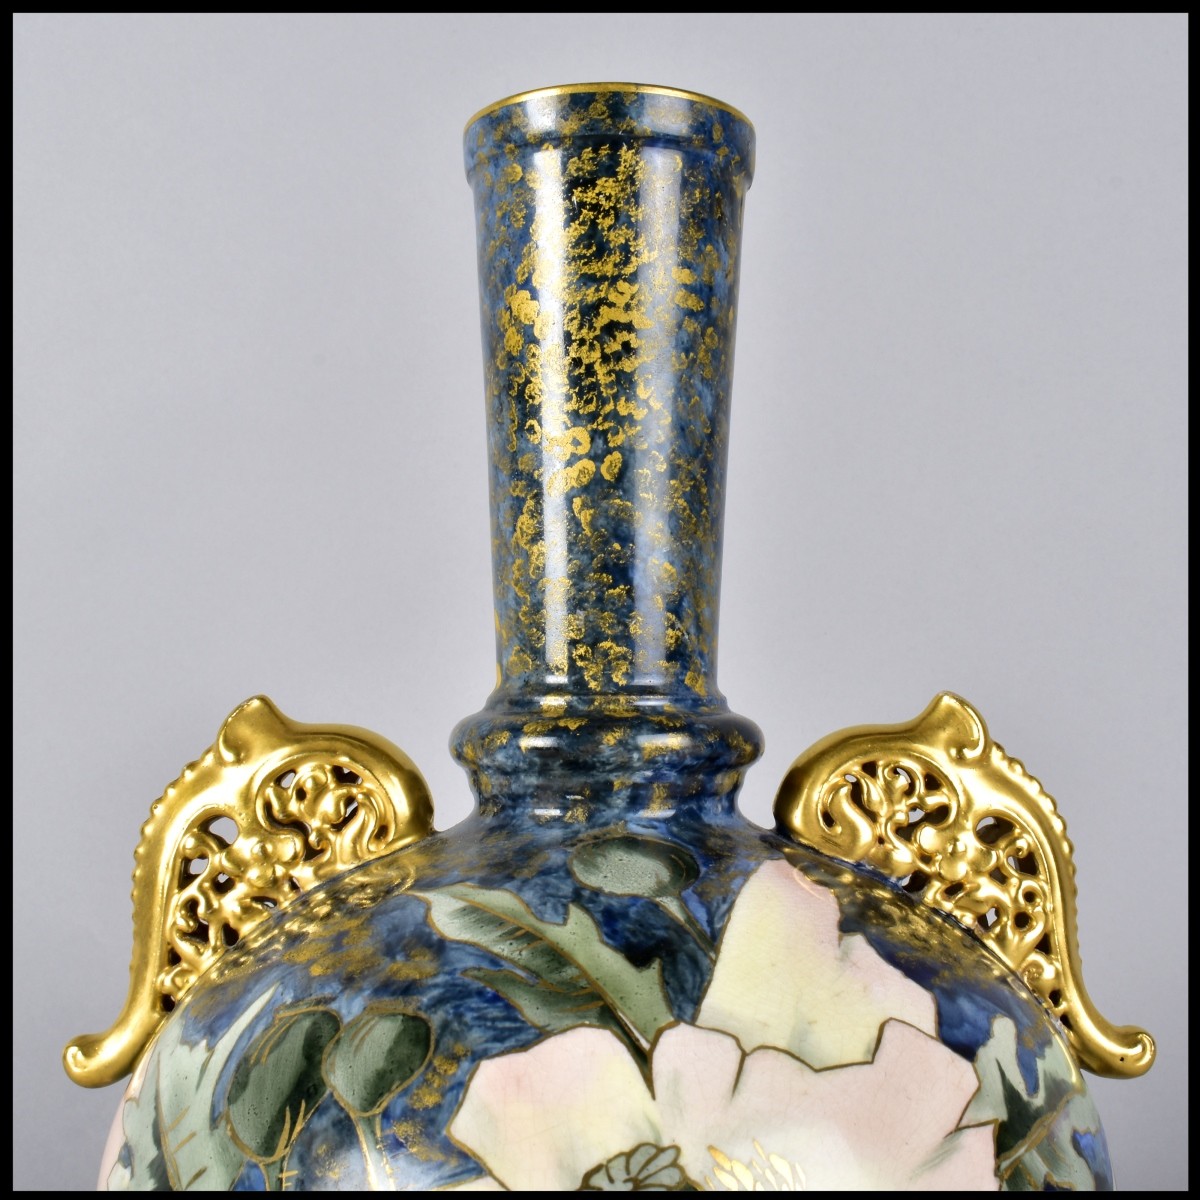 Royal Worcester Style Vase